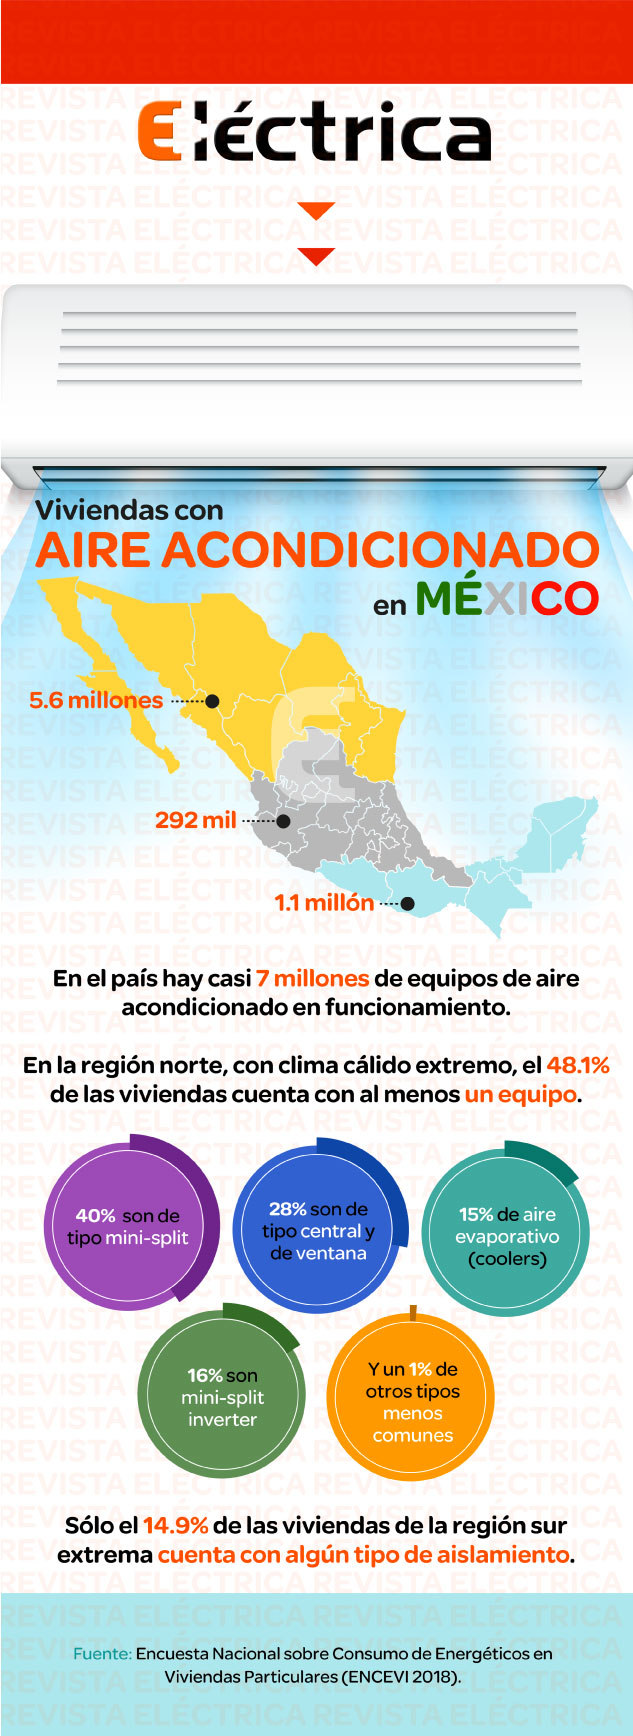 Viviendas con aire acondicionado en México